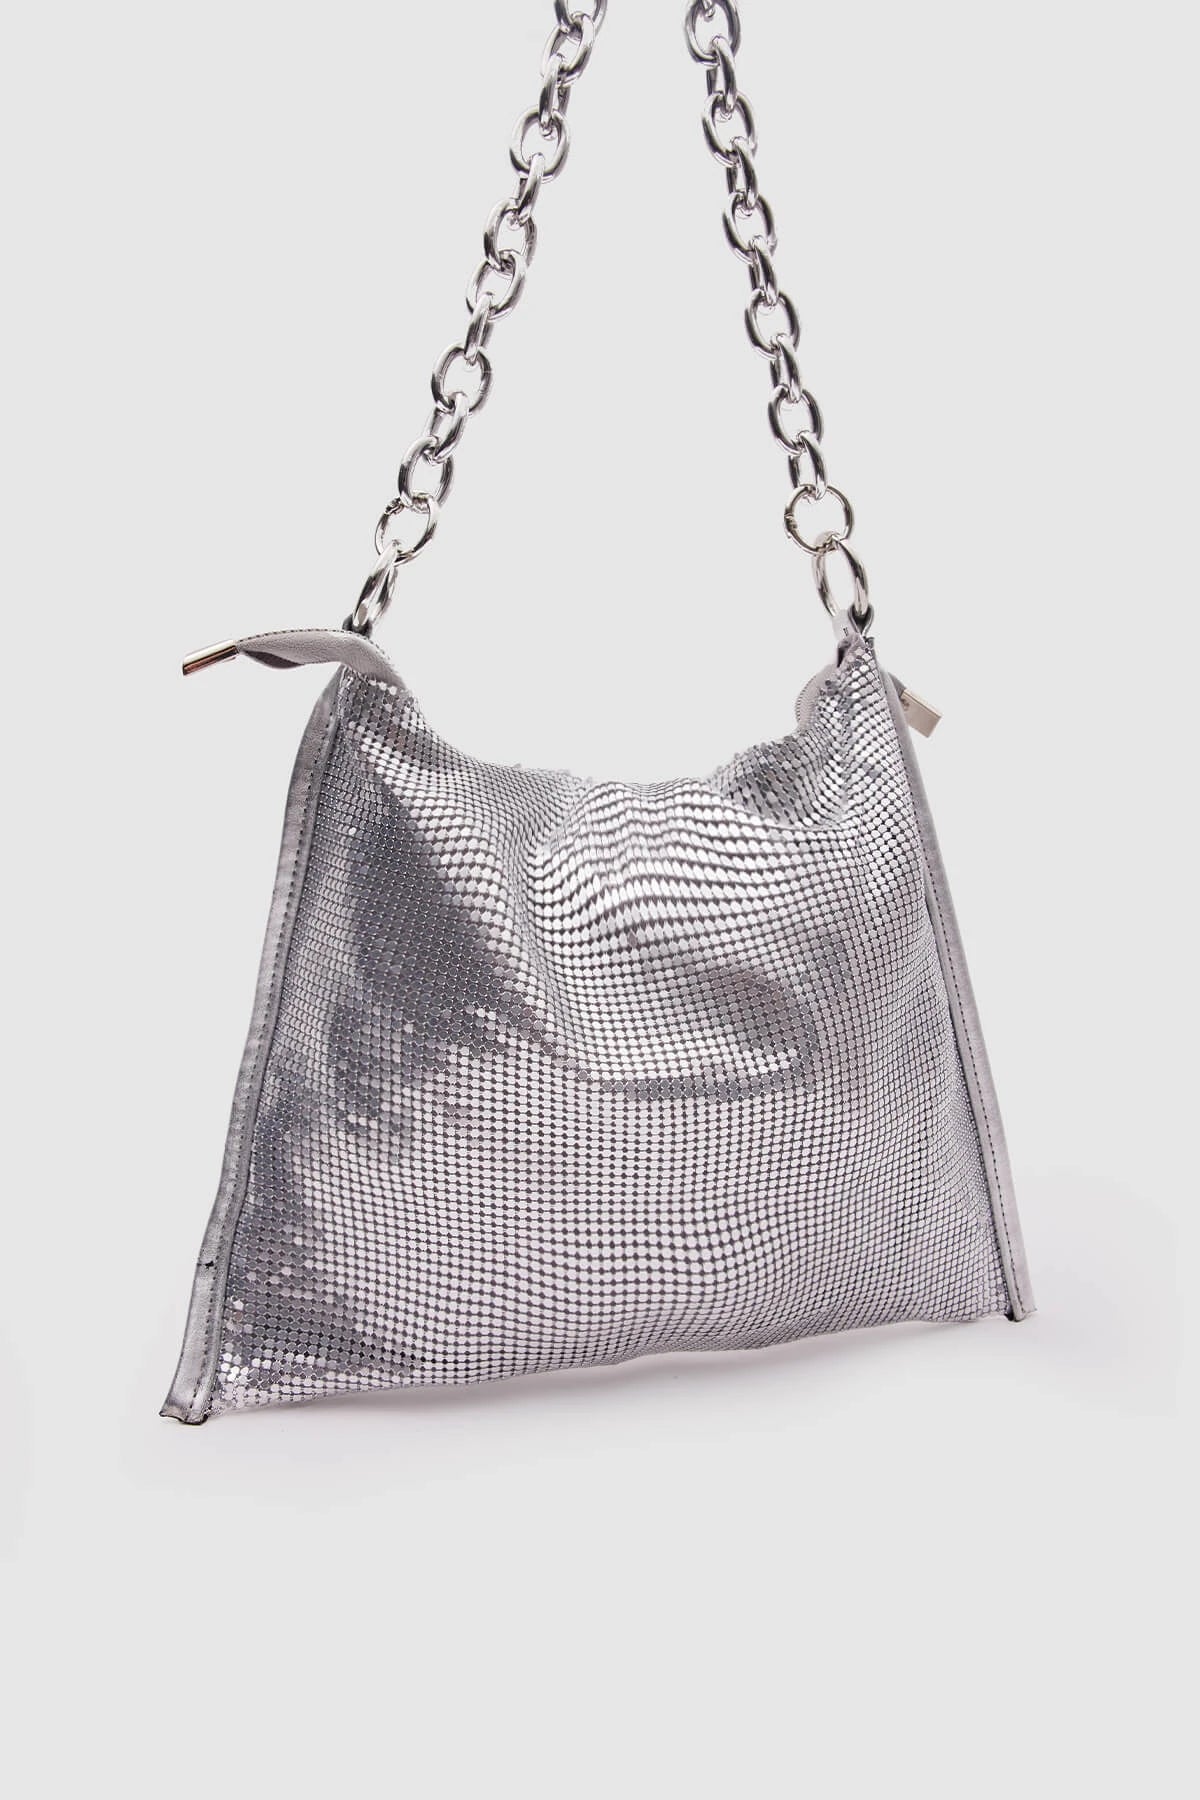 Metal Armor Chain Strap Bag handbags LUNARITY GARAGE   